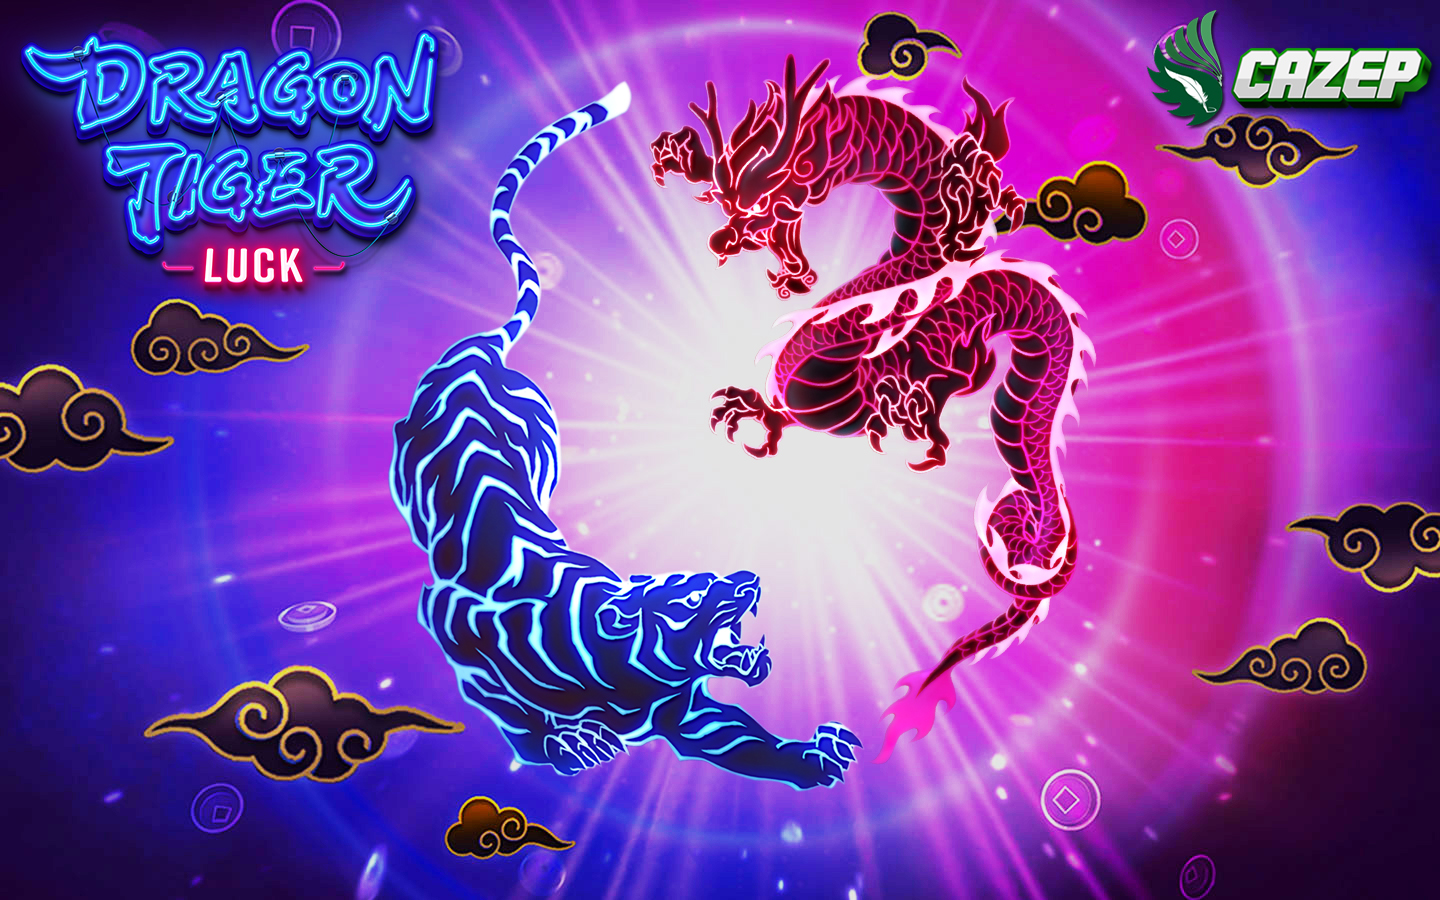 Dragon Tiger Luck PgSoft